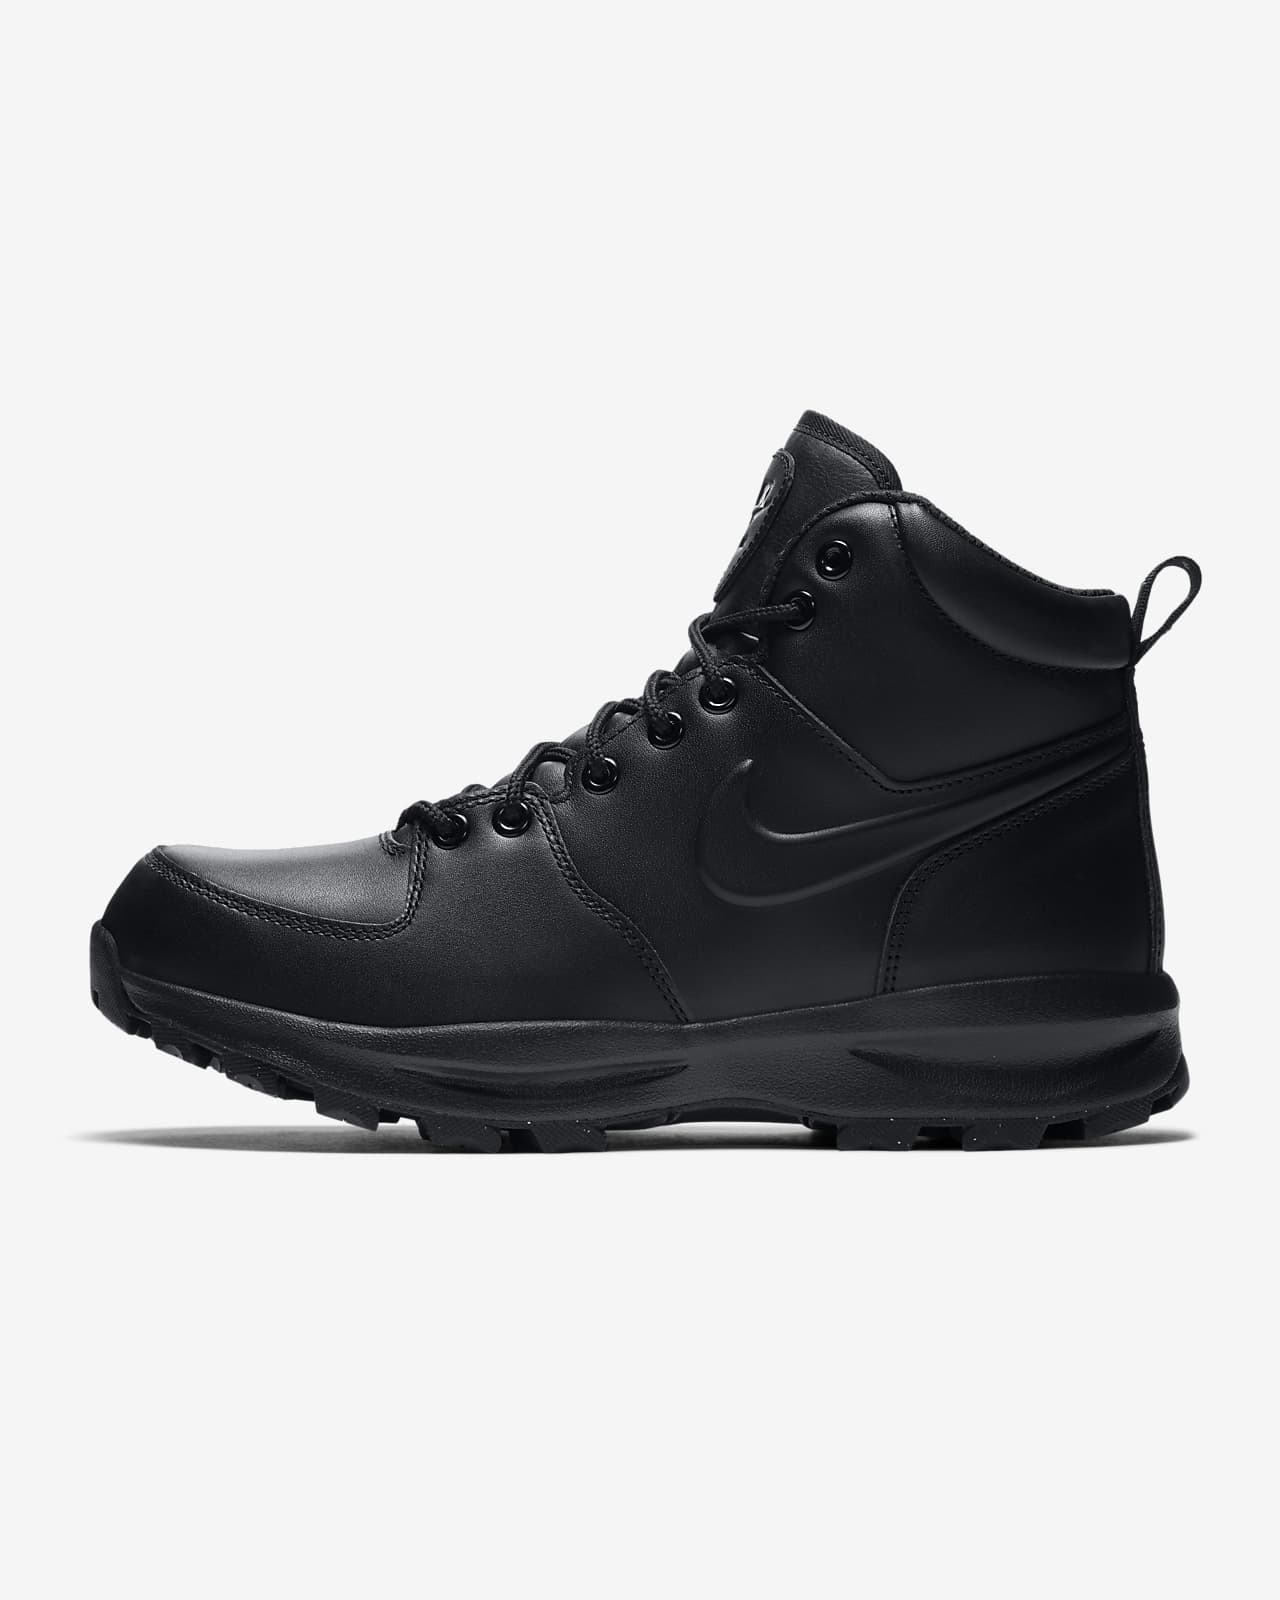 Nike Manoa Leather Men's Boot